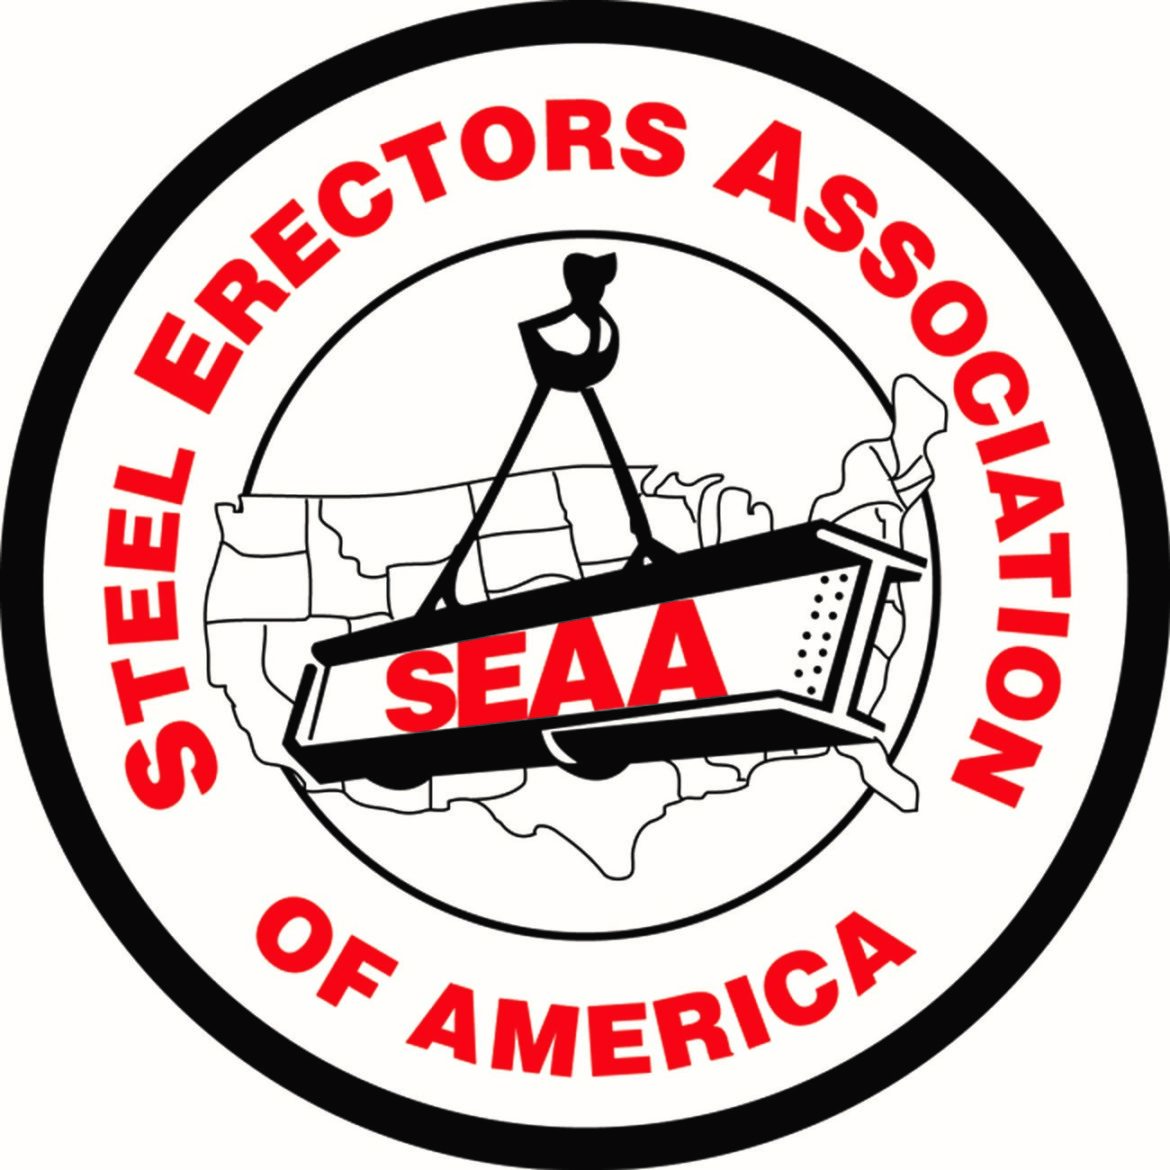 steel erectors association of america